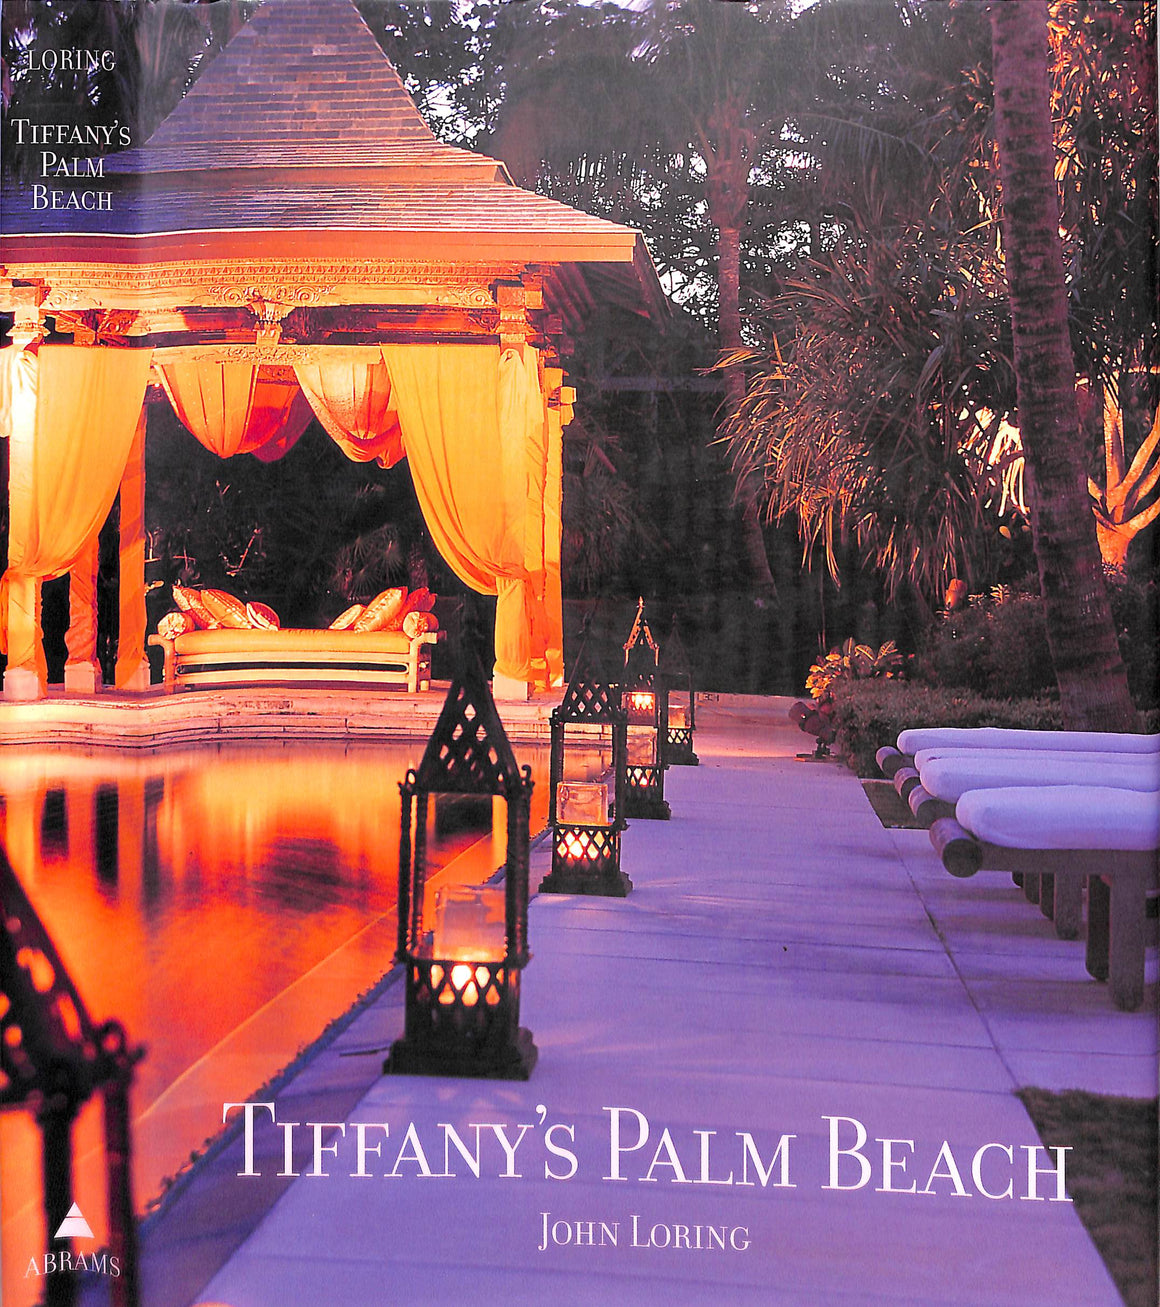 "Tiffany's Palm Beach" 2005 LORING, John